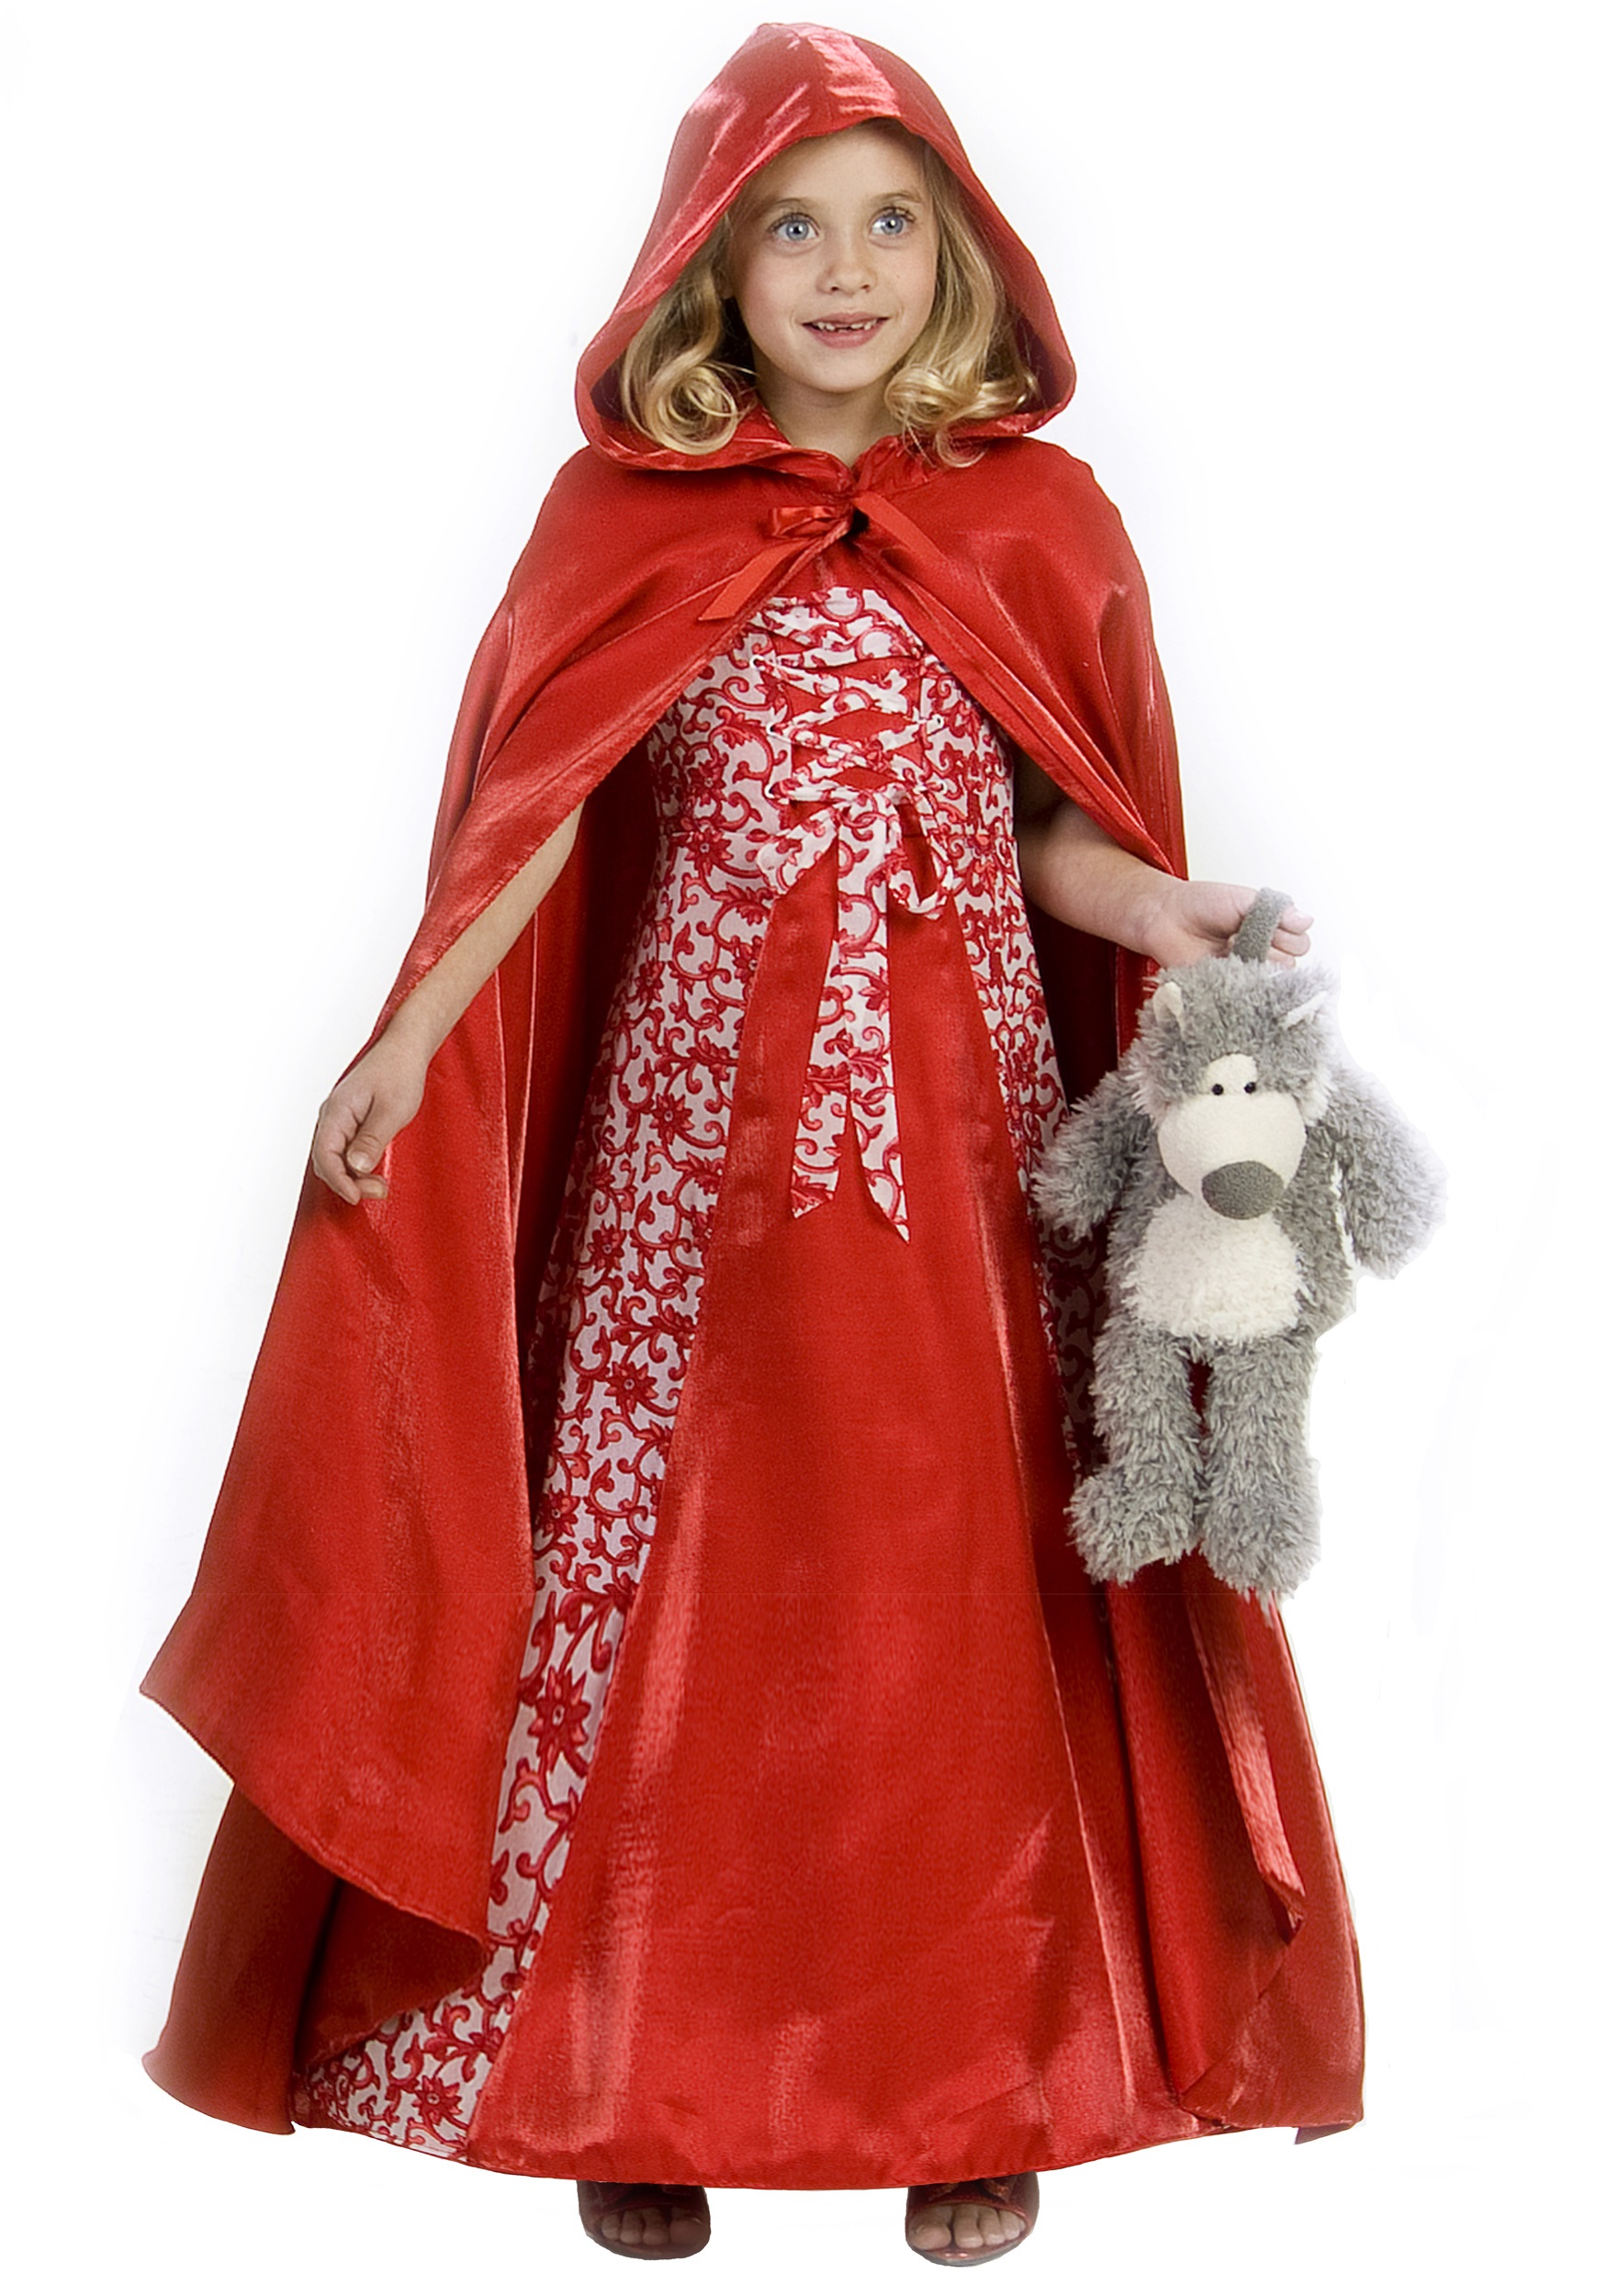 princess-red-riding-hood-costume